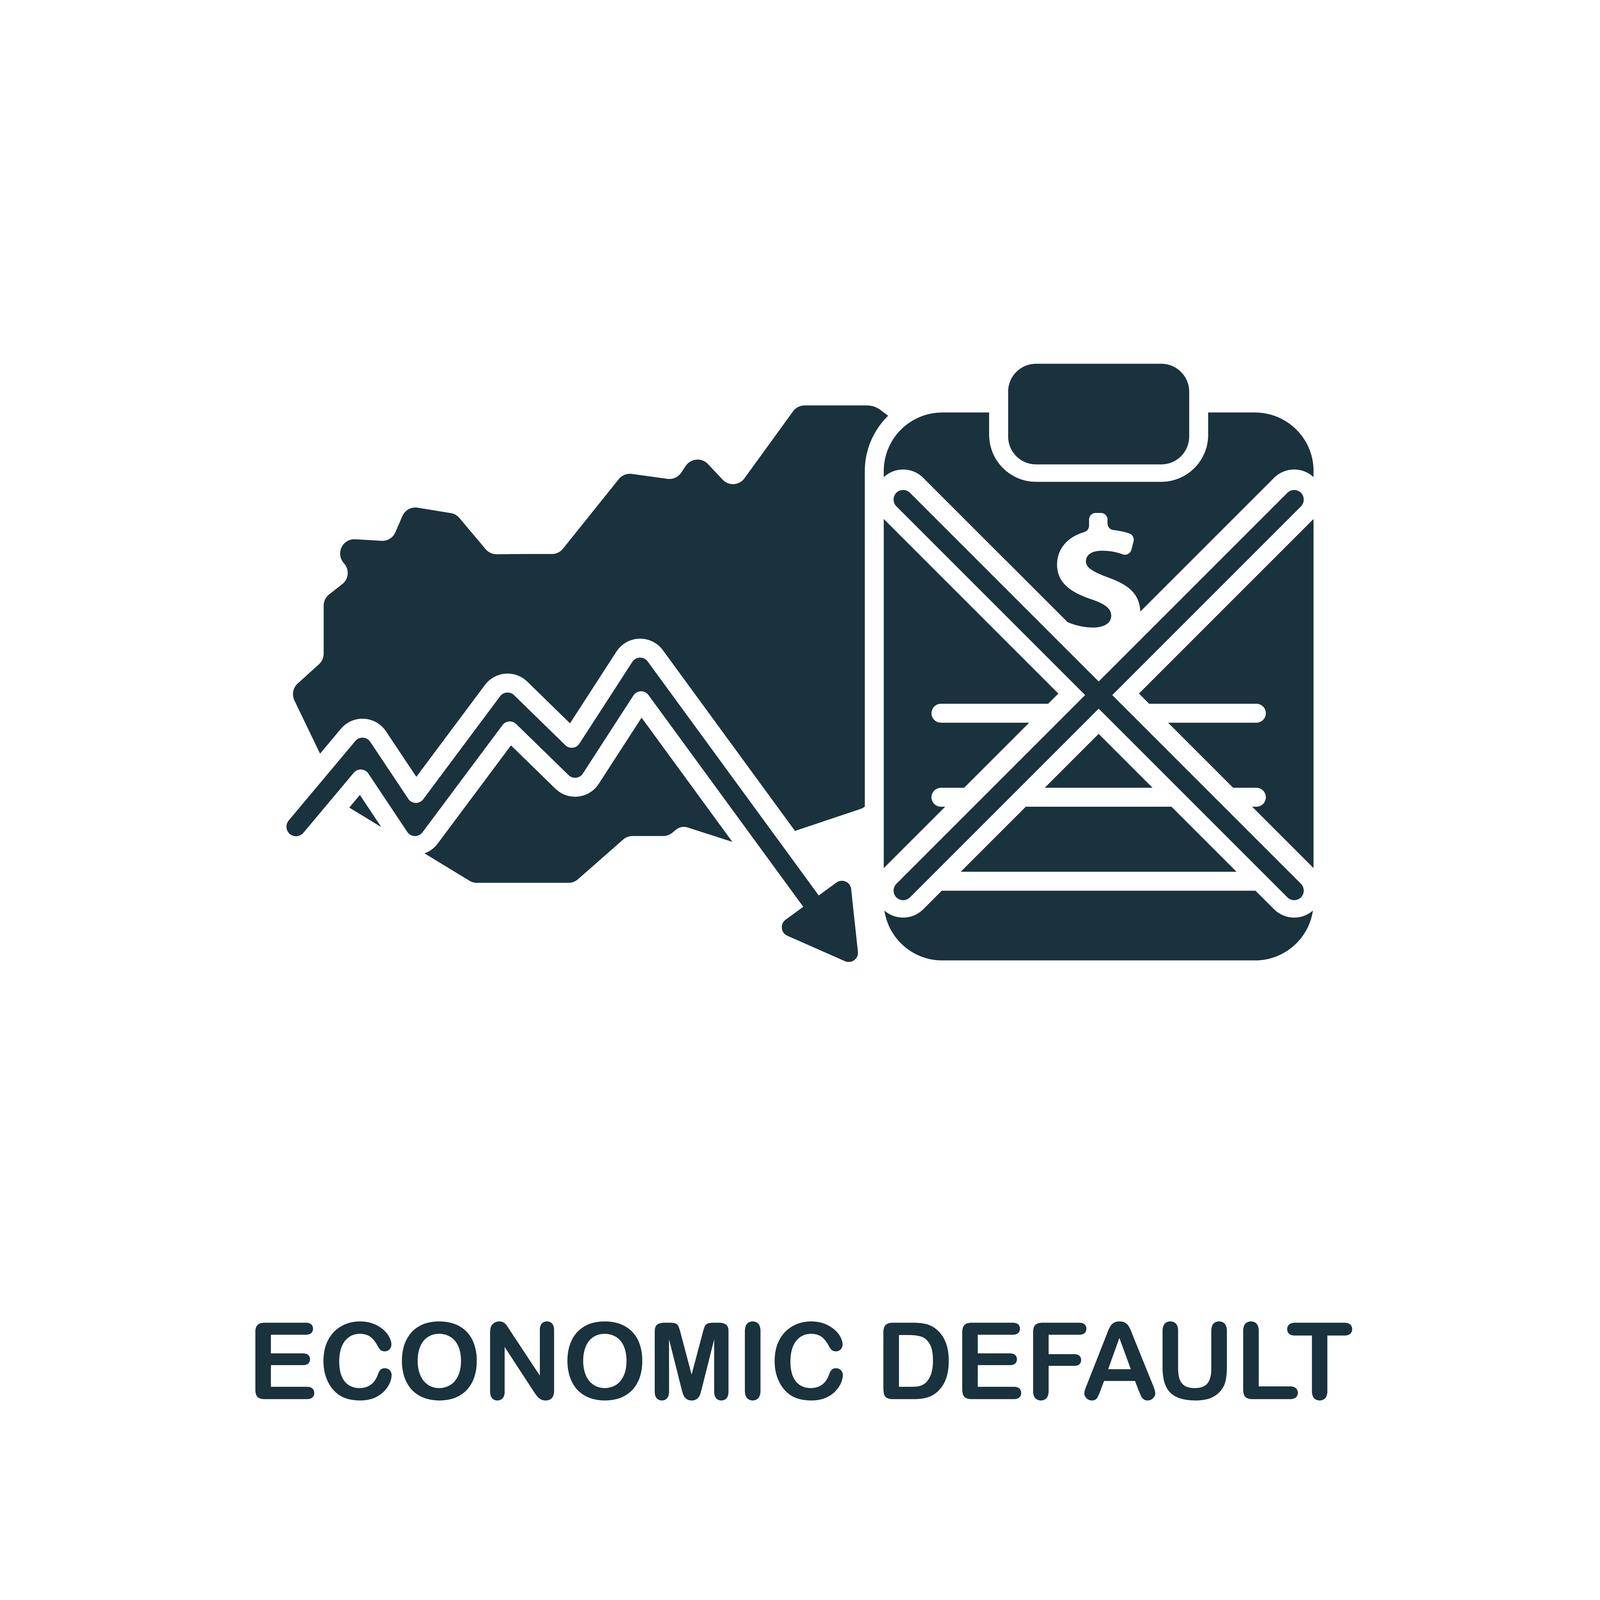 Economic Default icon. Monochrome simple line Economic Crisis icon for templates, web design and infographics by simakovavector